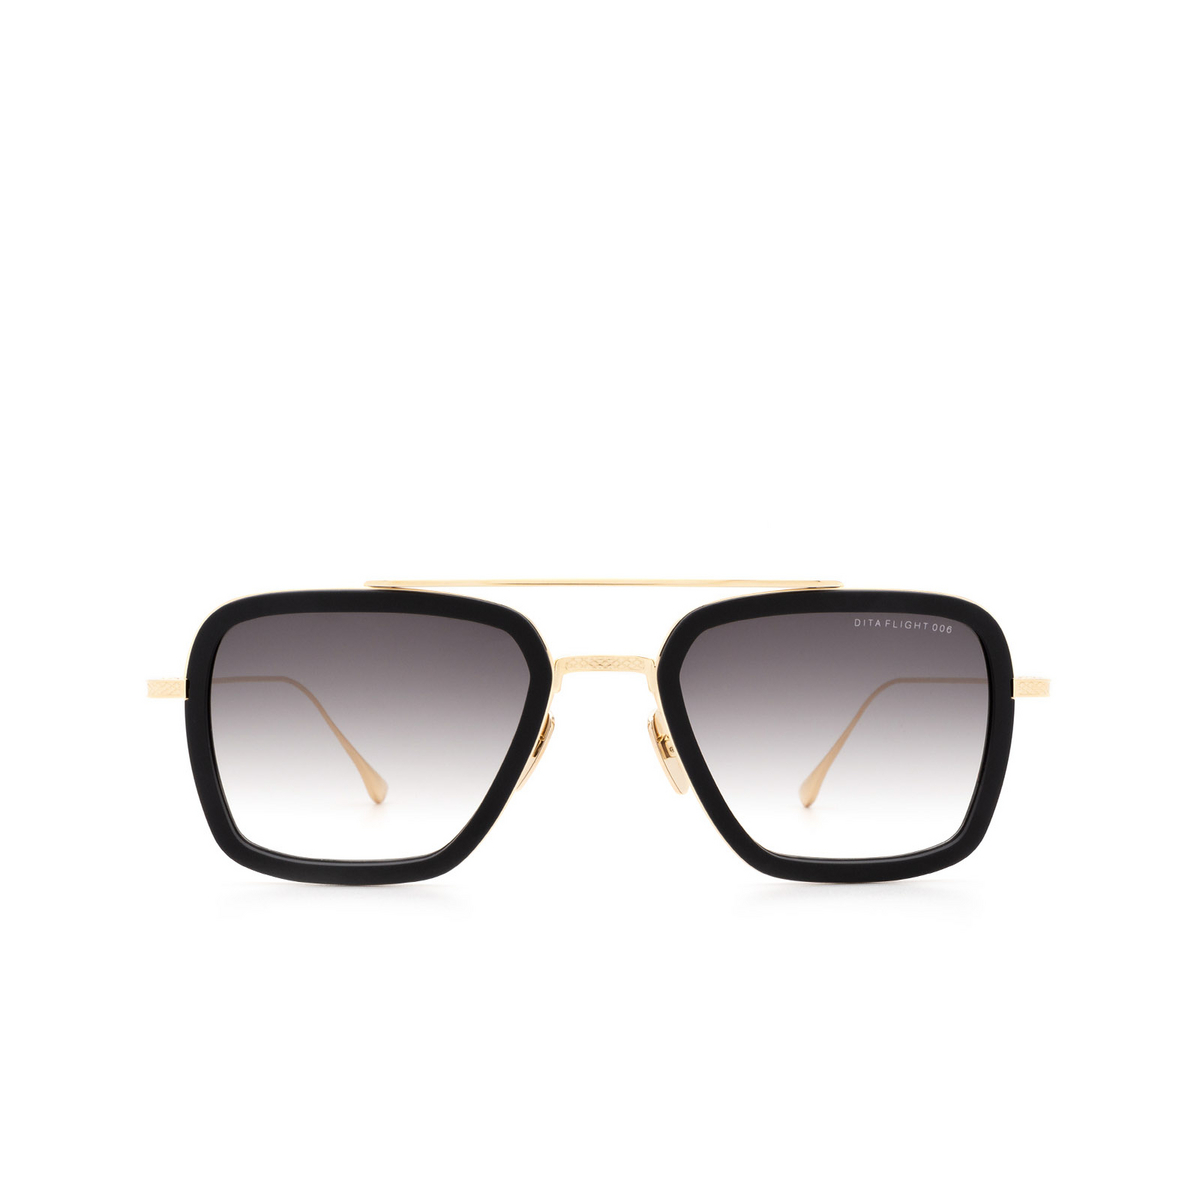 Dita FLIGHT.006 Sunglasses BLK-GLD Black & Gold - front view